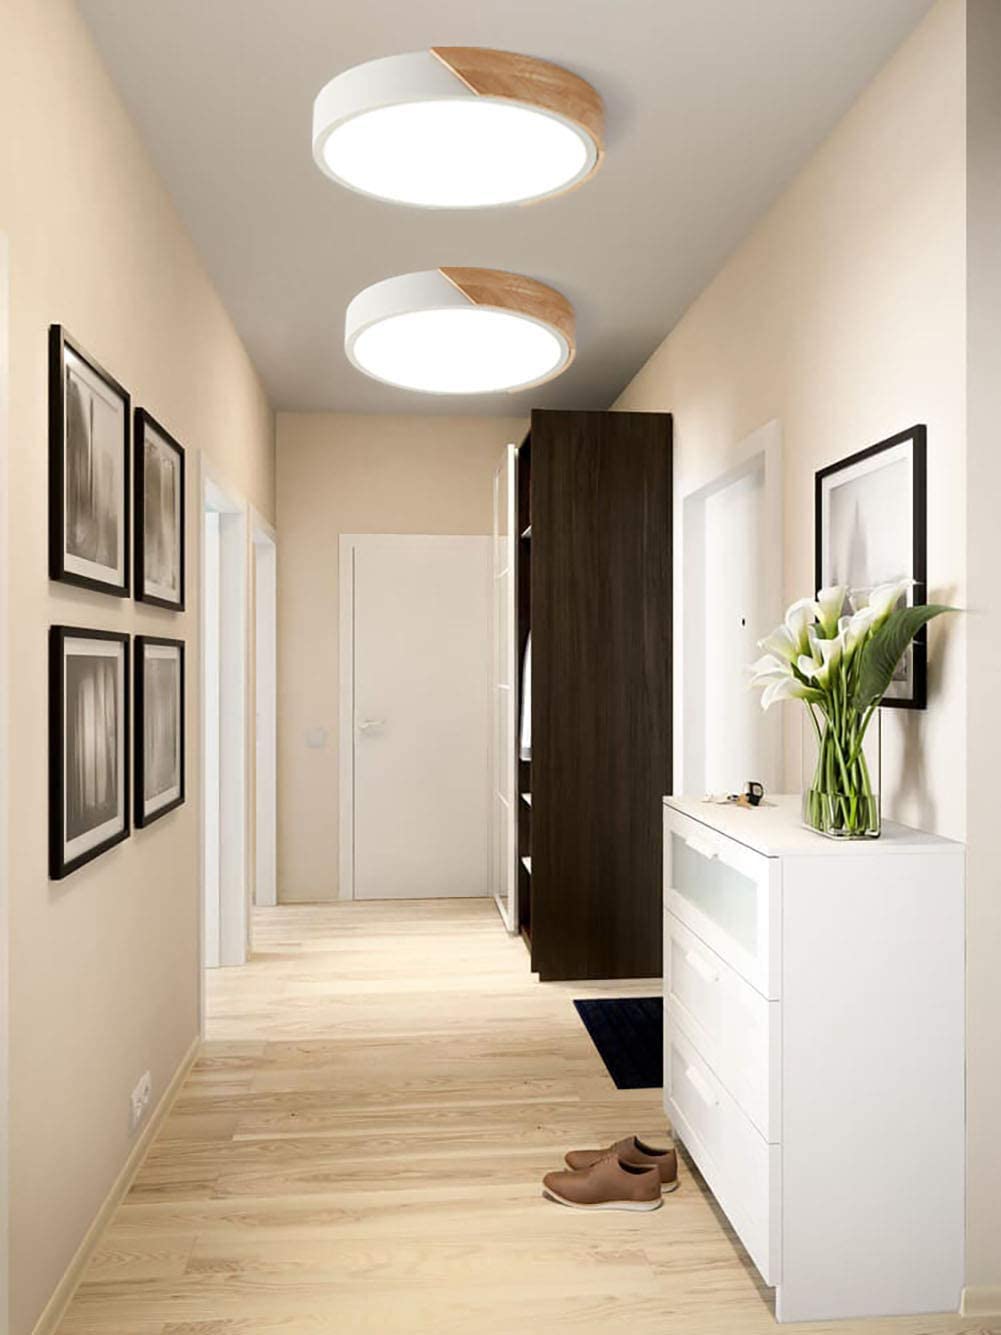 Modern LED Ceiling Light Wood style circle flush mount ceiling lamp